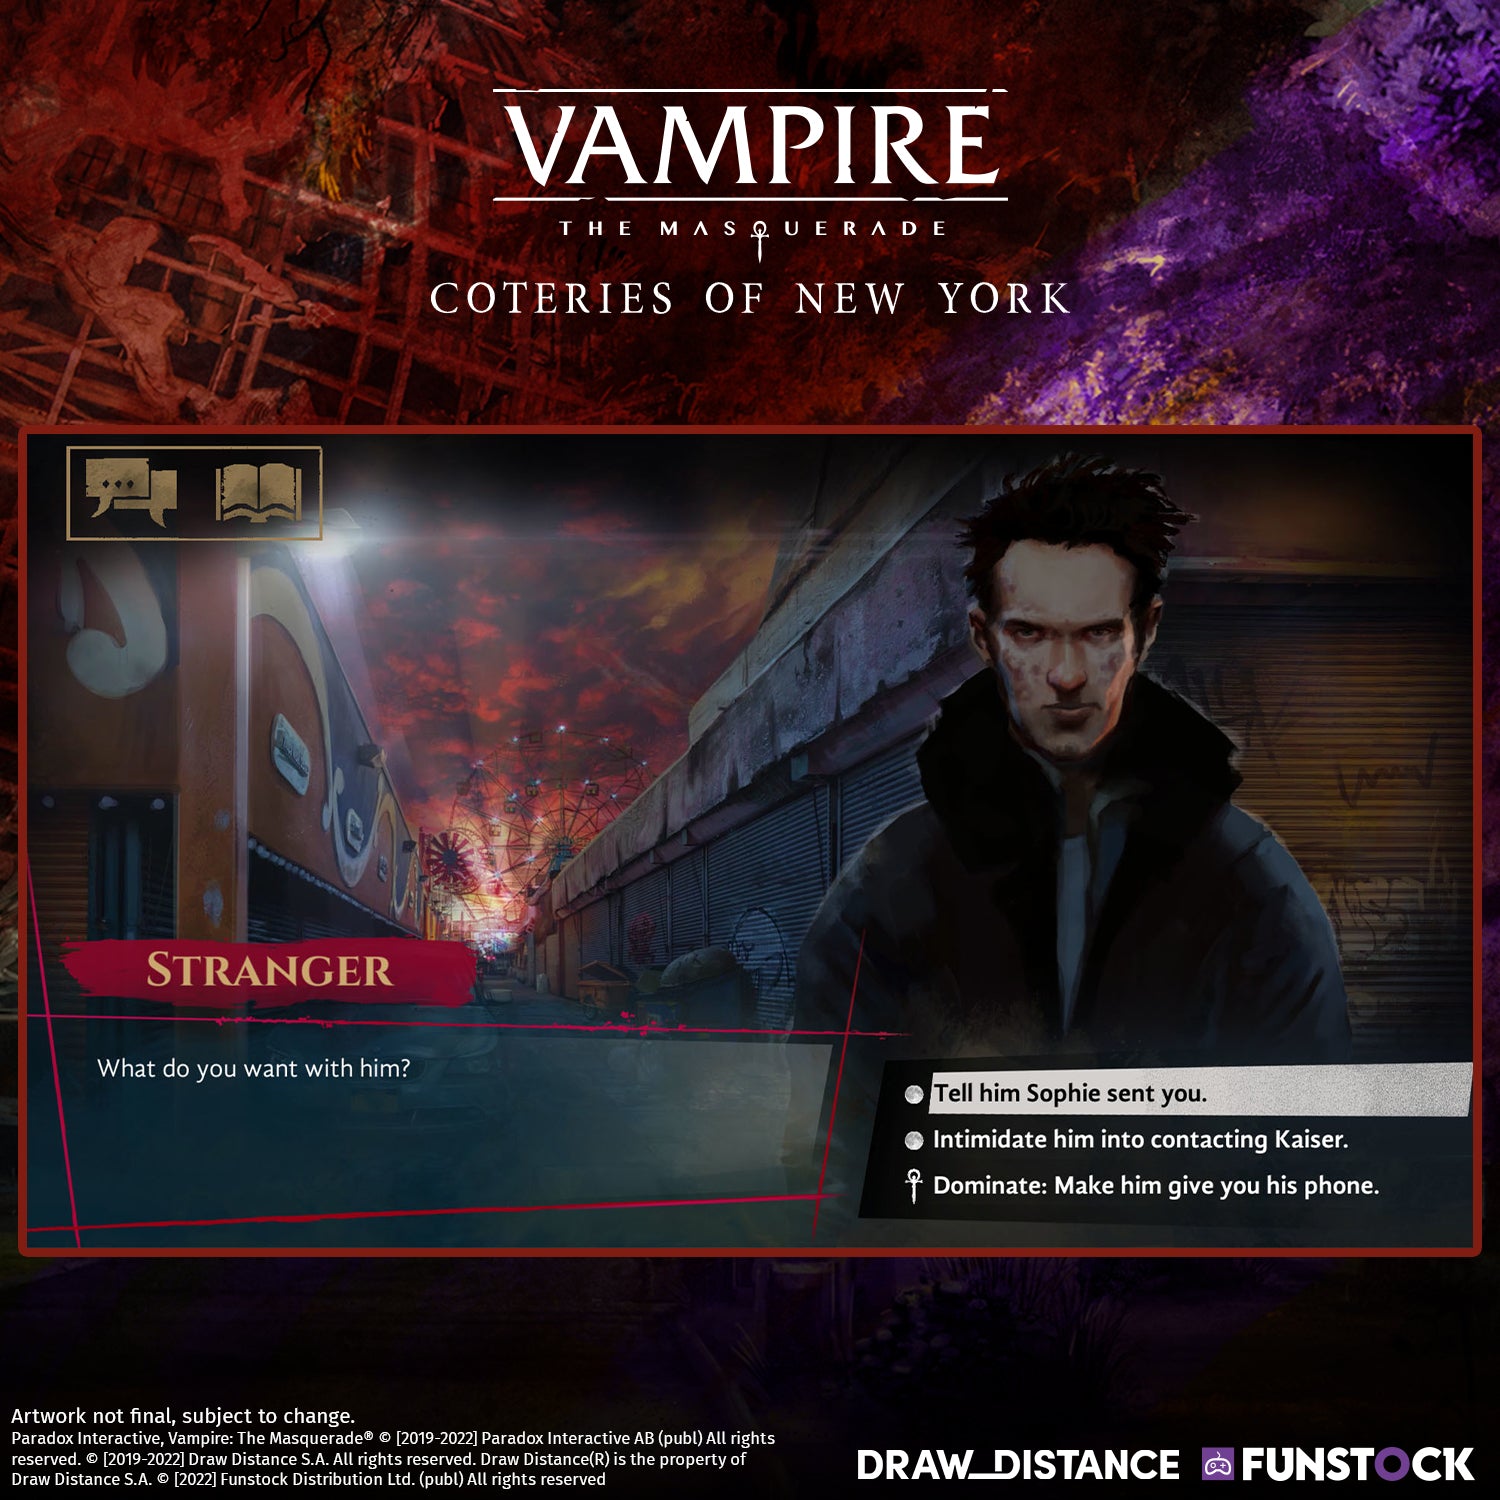 Vampire the Masquerade: The New York Bundle (PlayStation 4)